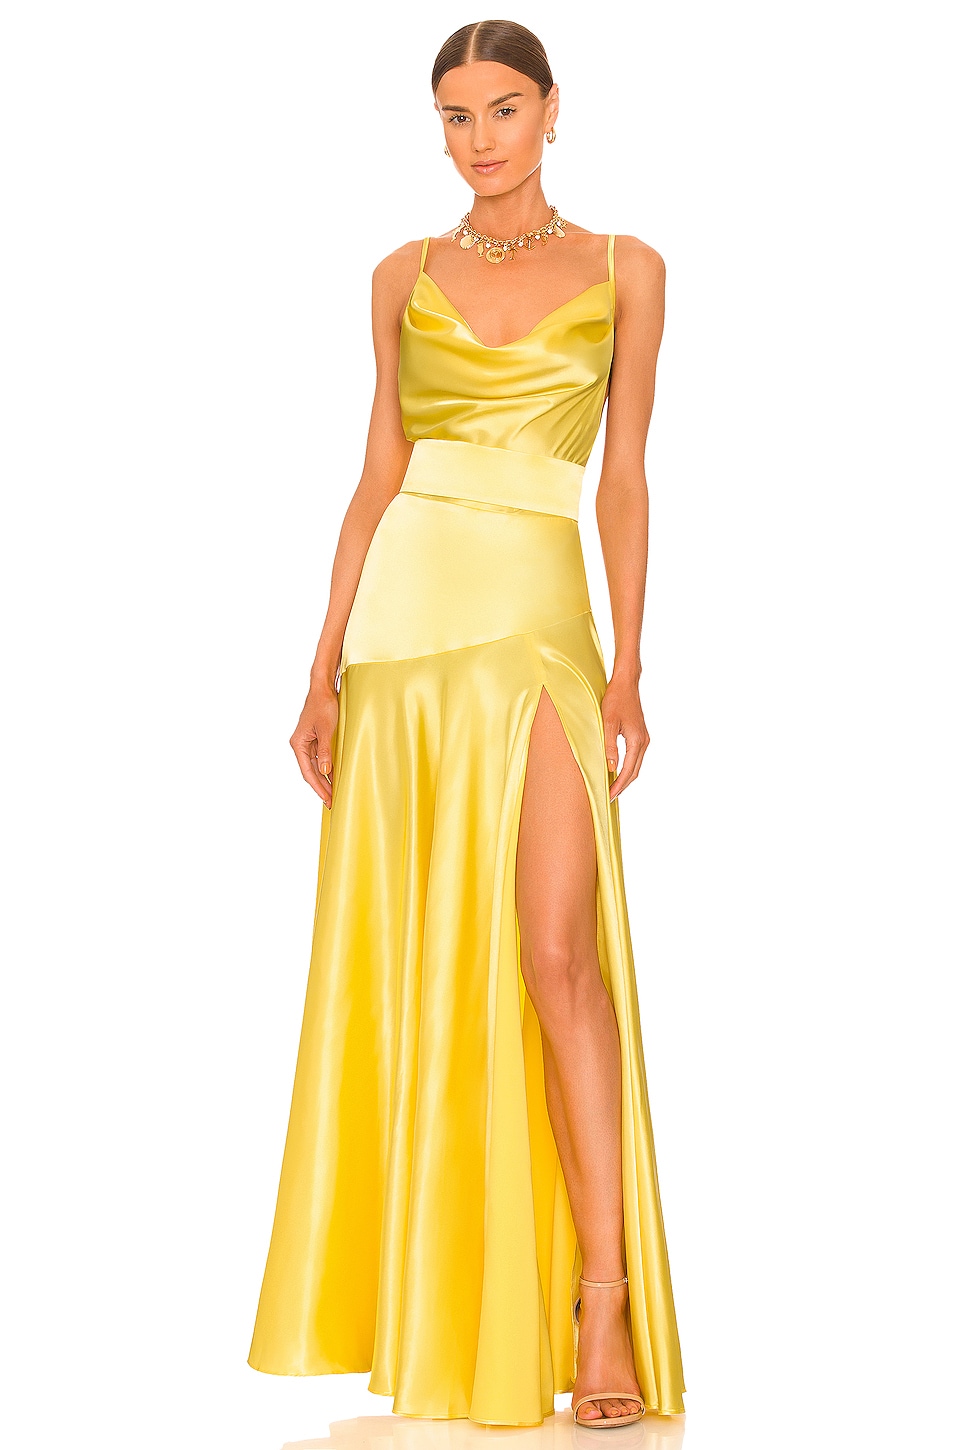 yellow maxi dress